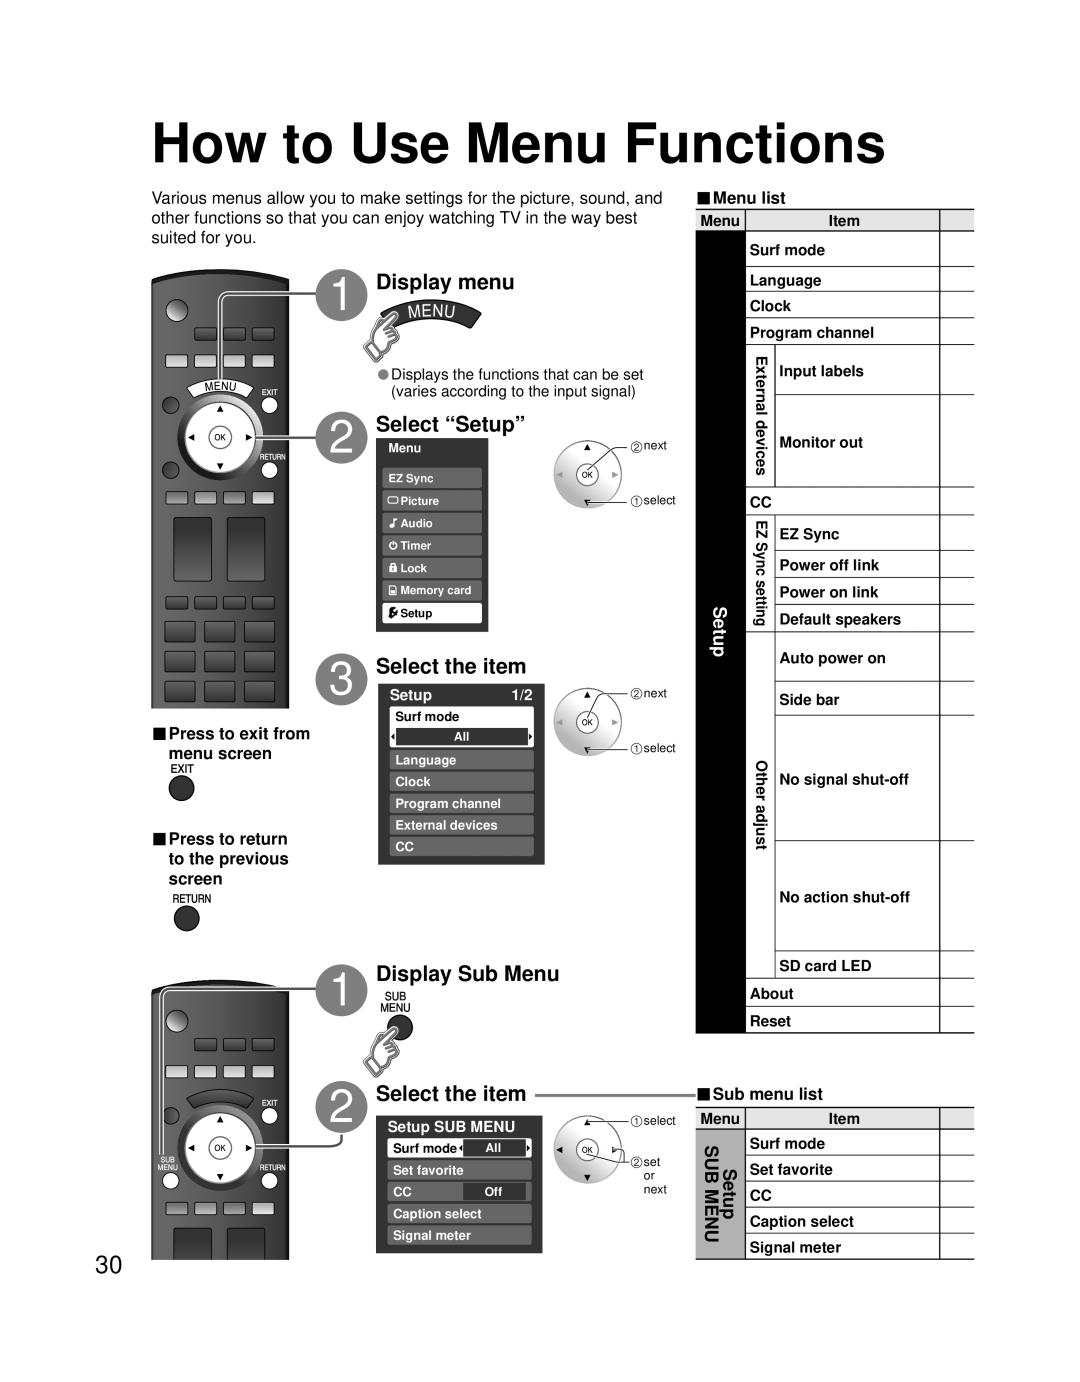 Panasonic TH 58PZ700U Select “Setup”, Display Sub Menu, Select the item, Sub menu list, Surf mode, Input labels, devices 